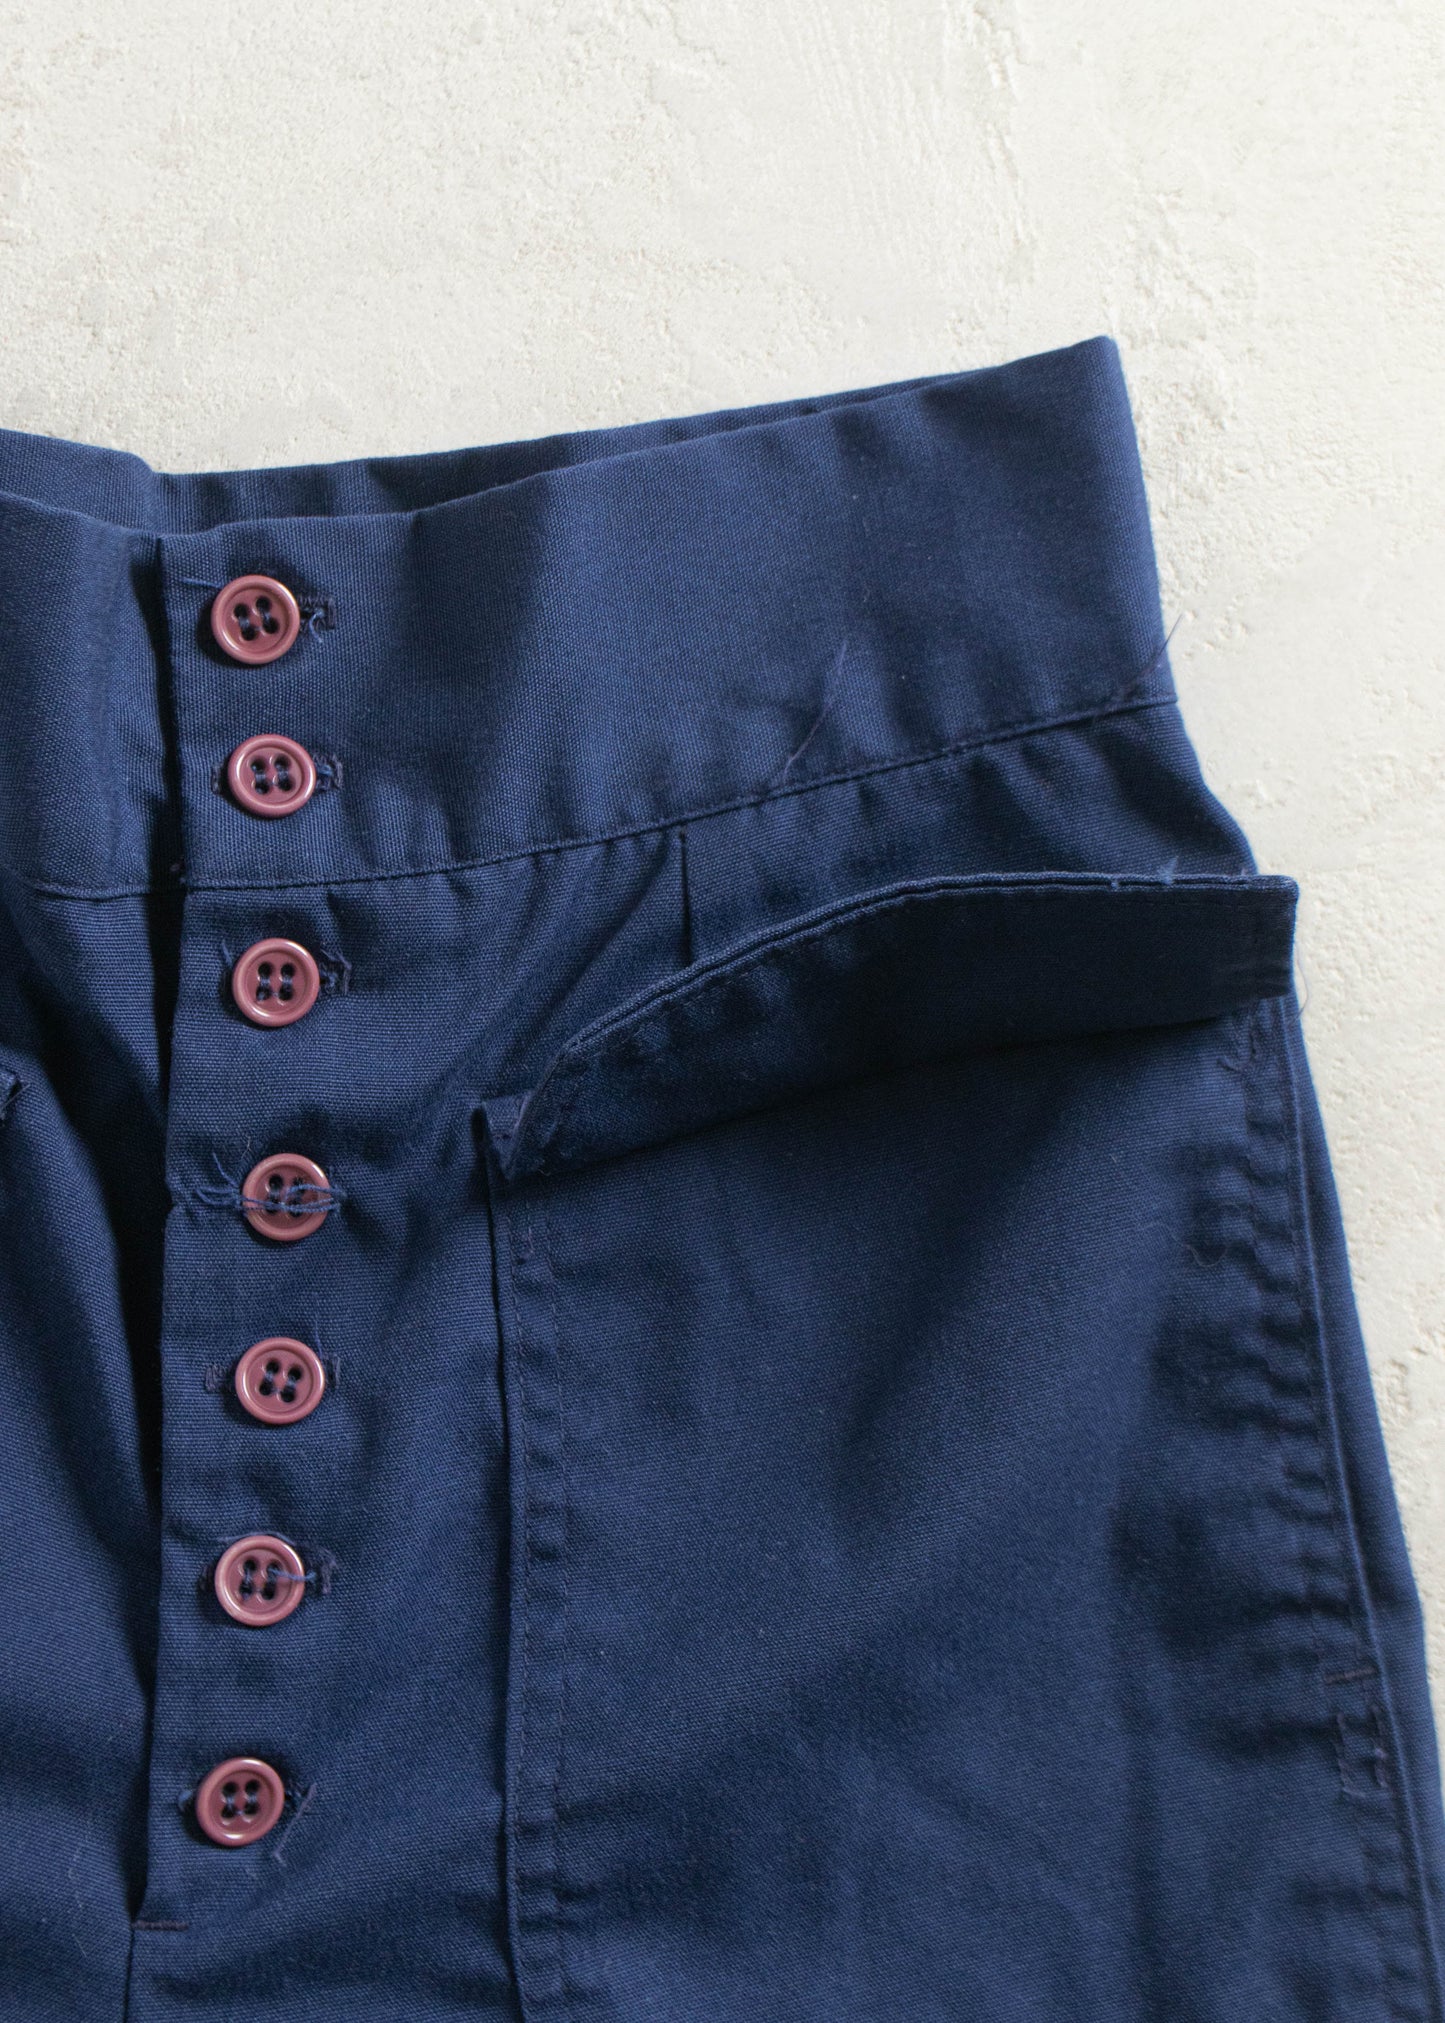 Vintage 1970s Bell Bottom Pants Size Women's 25 Men's 28